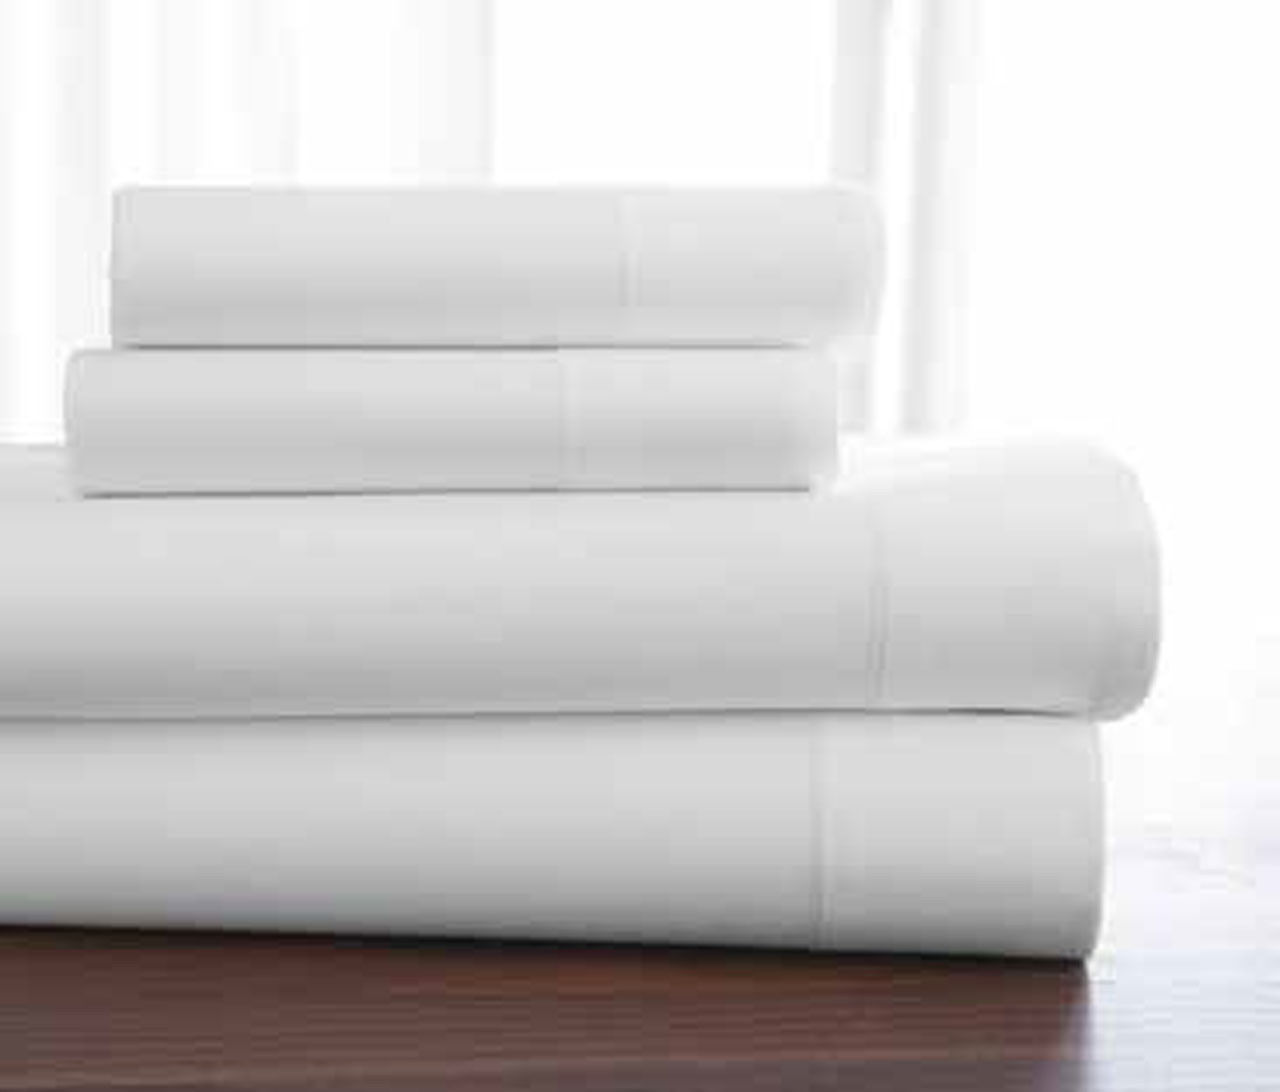 What sets Welspun T-400 Premium hygrocotton sheets apart from regular cotton?